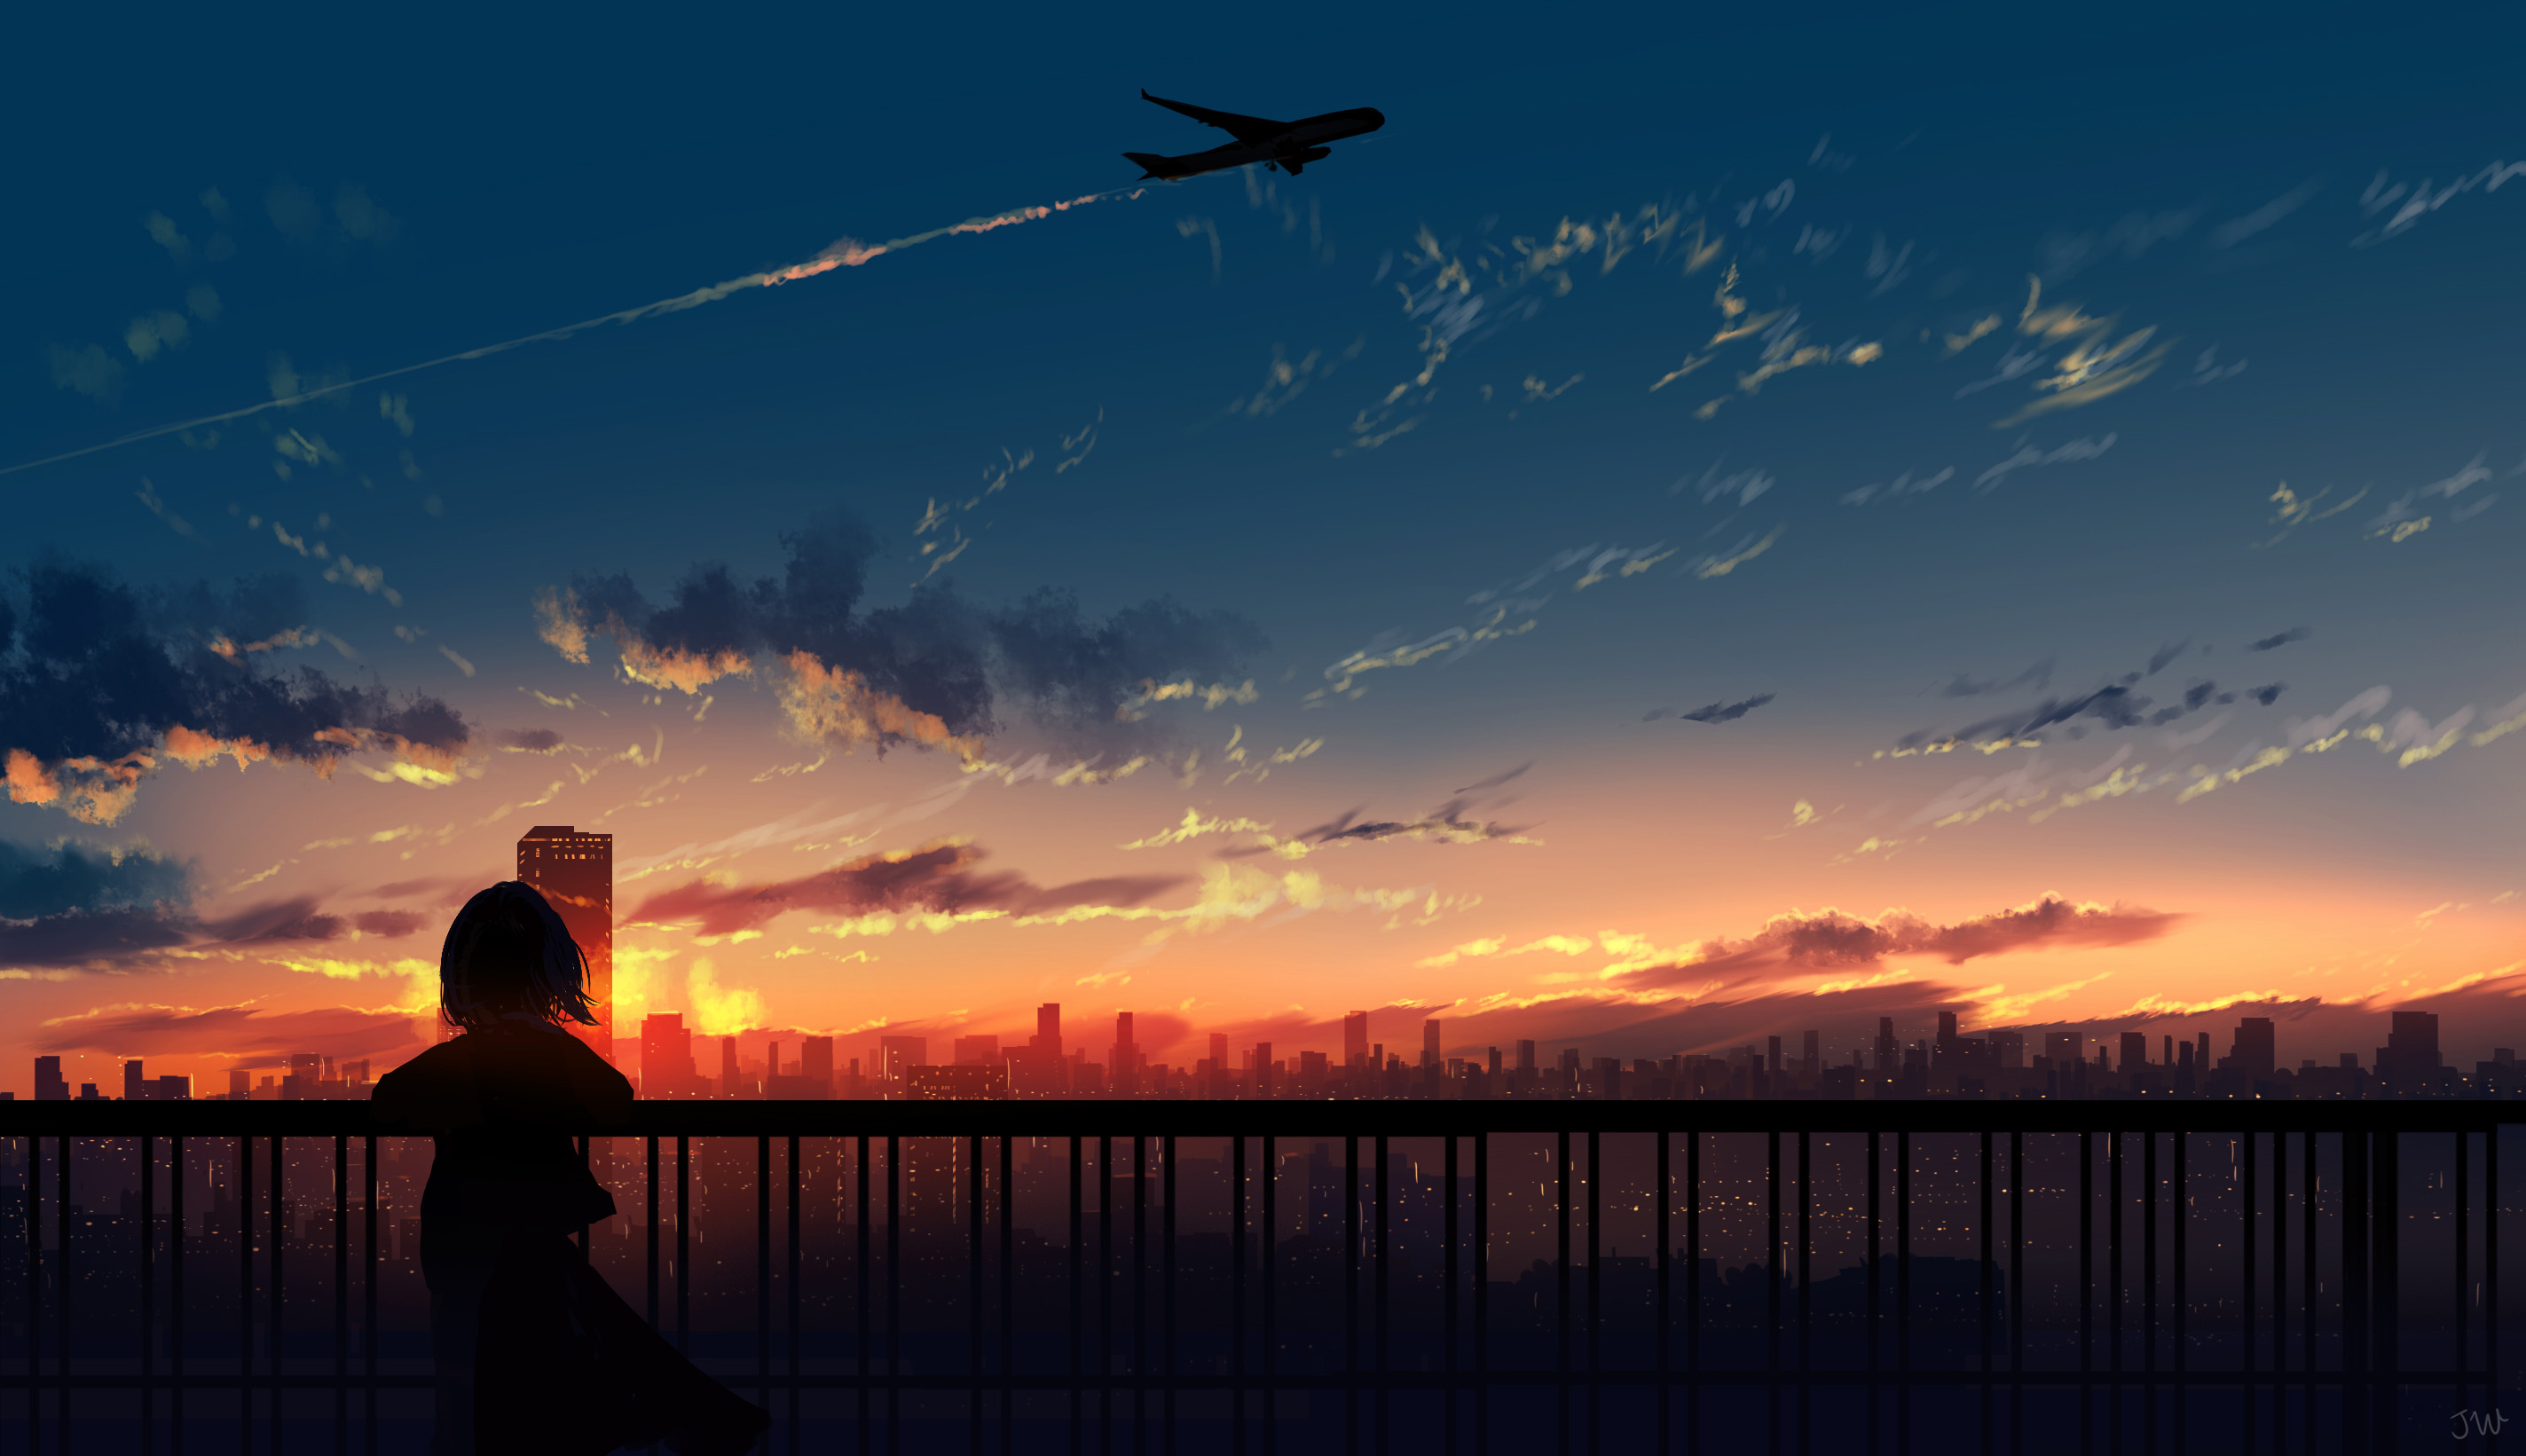 Anime Anime Girls HuashiJW Clouds Fence Airplane Cityscape 2847x1641